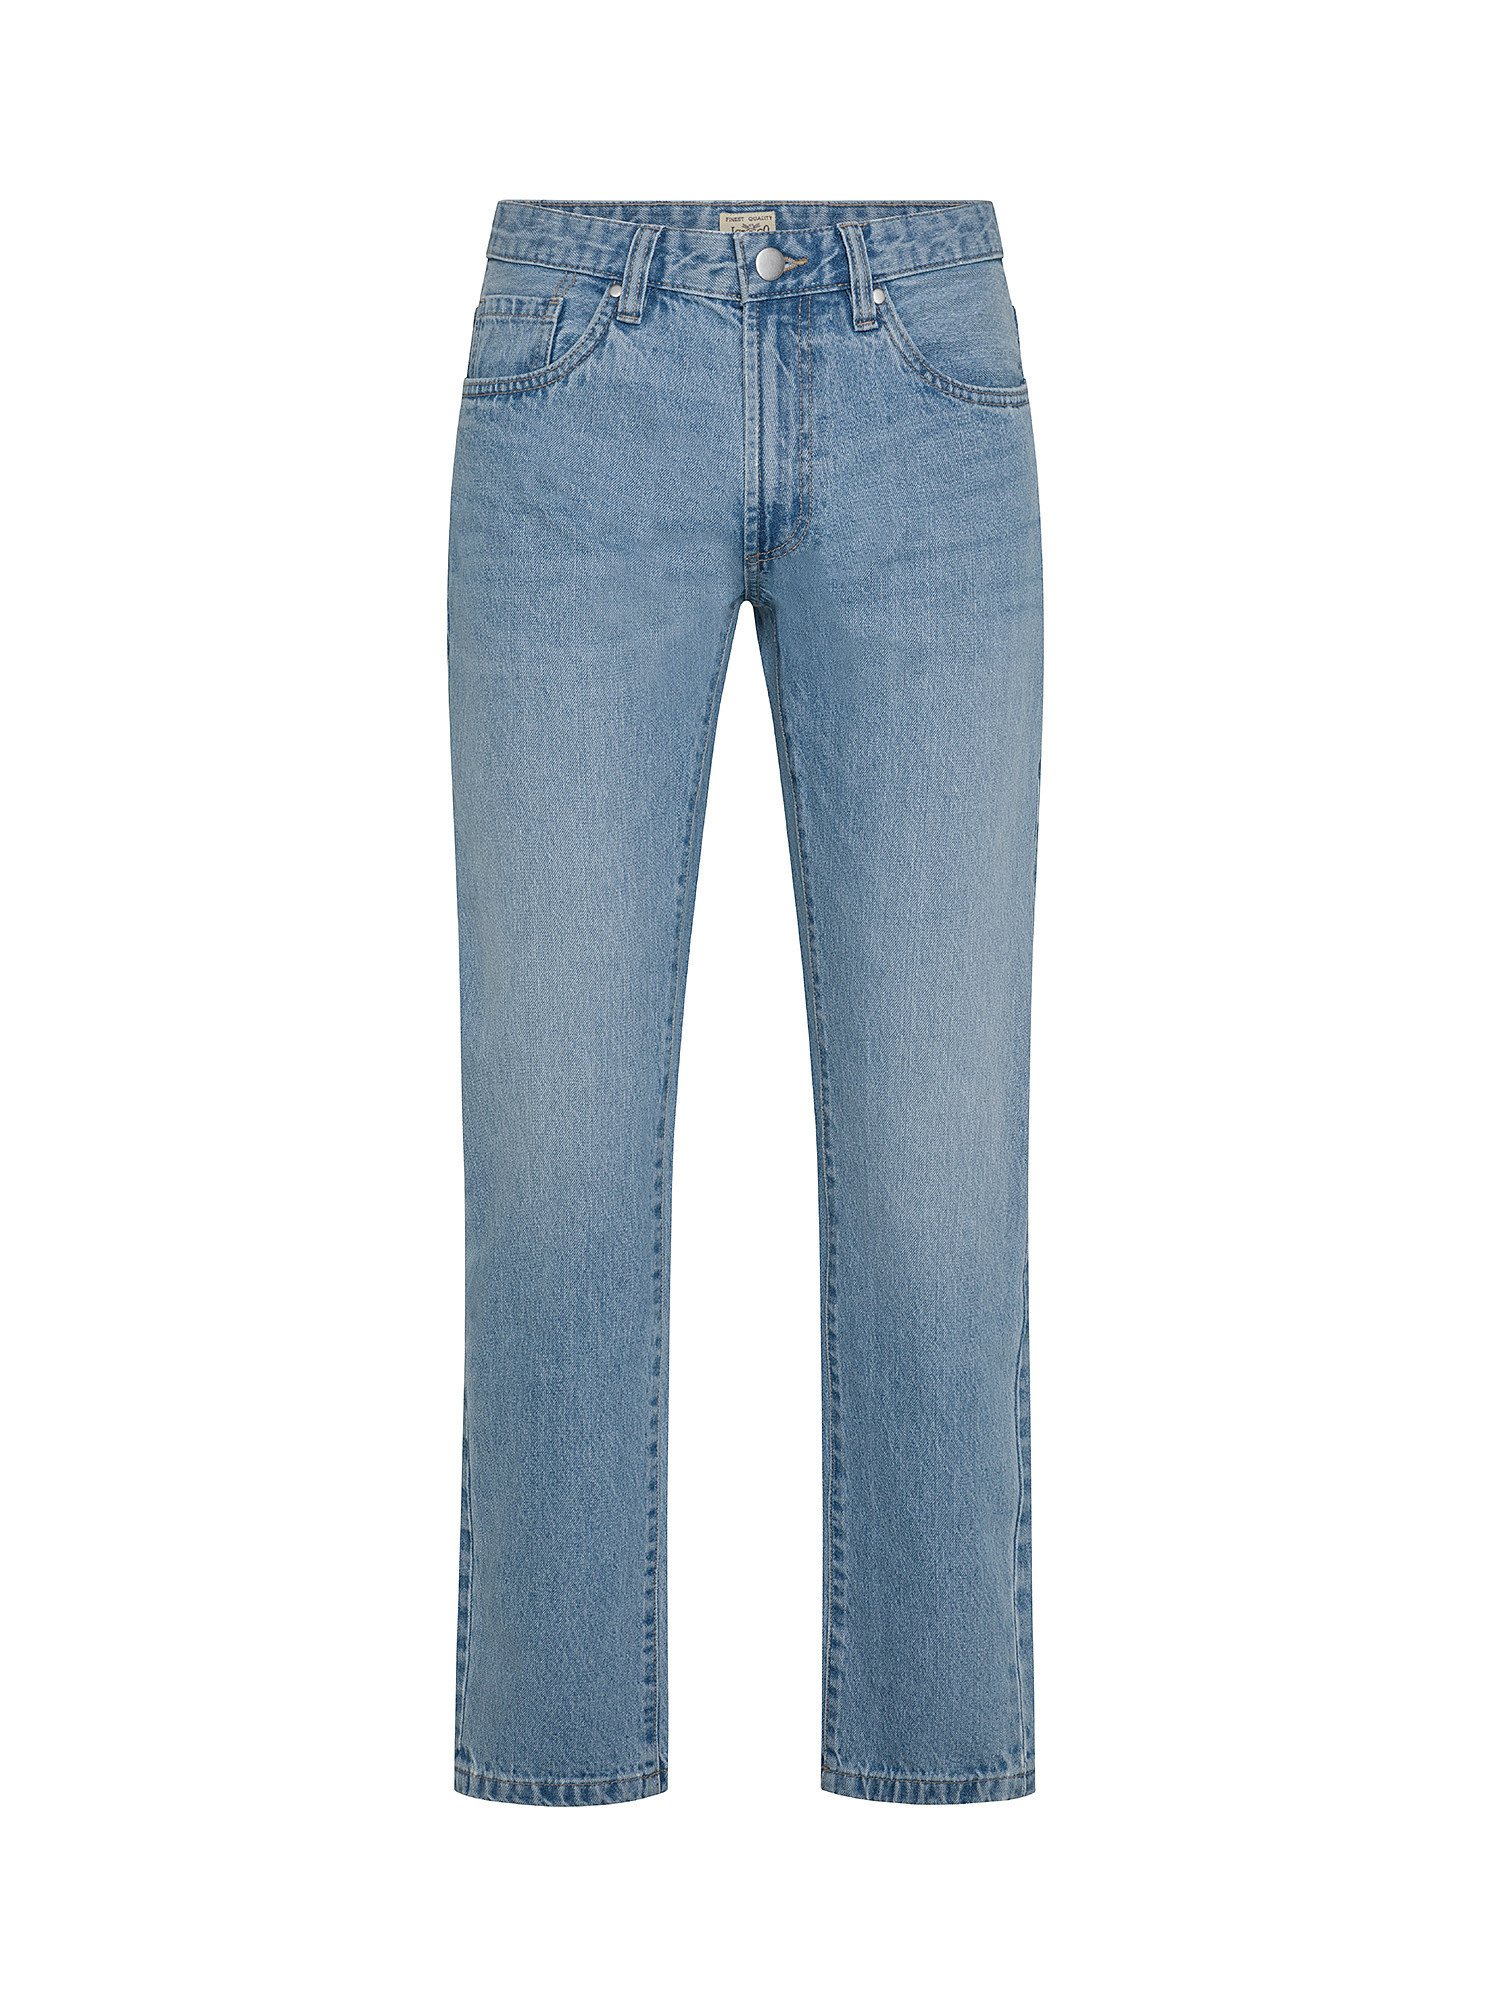 JCT - Five pocket jeans in pure cotton, Denim, large image number 0